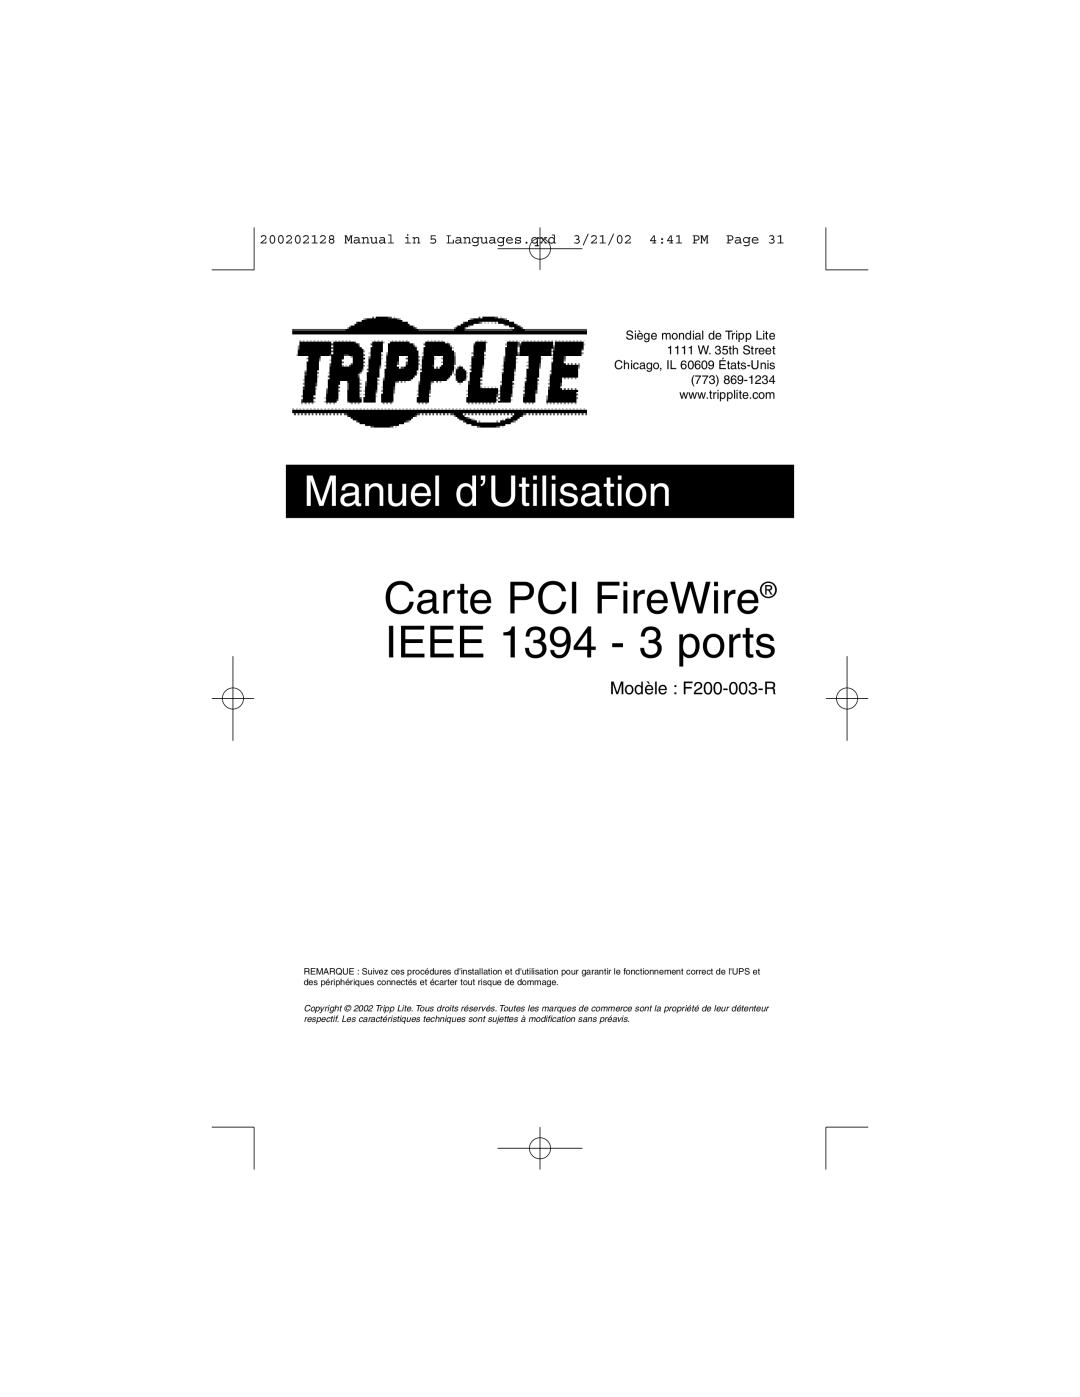 Tripp Lite F200-003-R user manual Carte PCI FireWire IEEE 1394 - 3 ports, Manuel d’Utilisation 